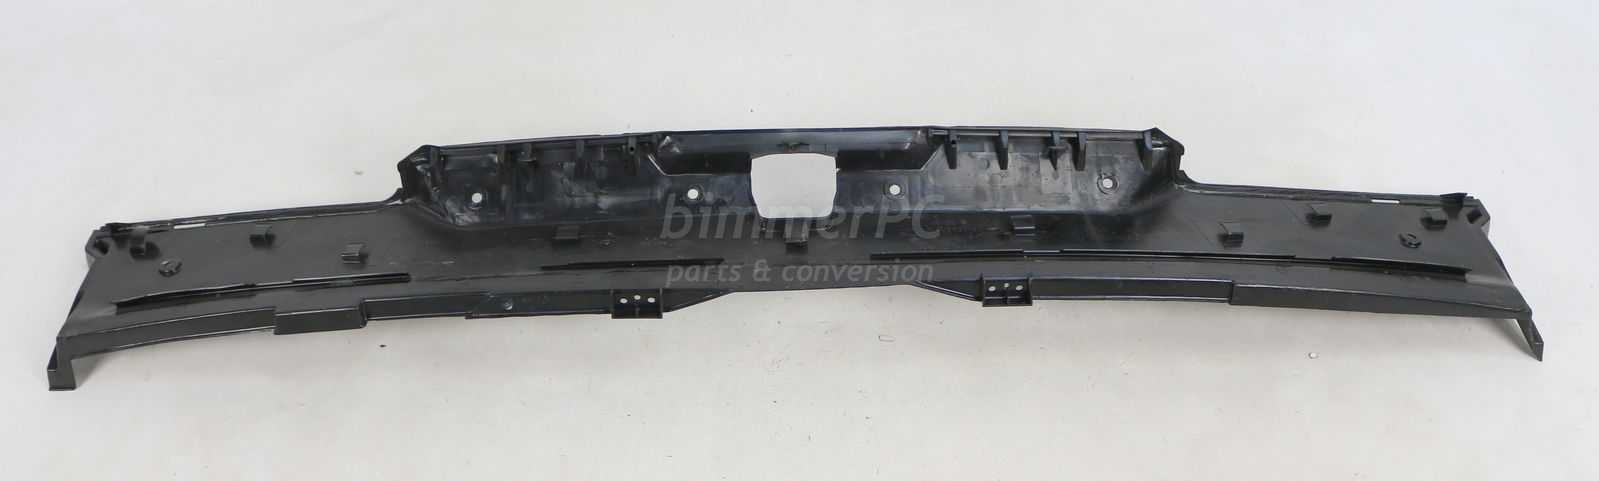 Picture of BMW 51478122479 Trunk Tail Black Plastic Rear Edge Trim Cover Panel E36 Sedan for sale